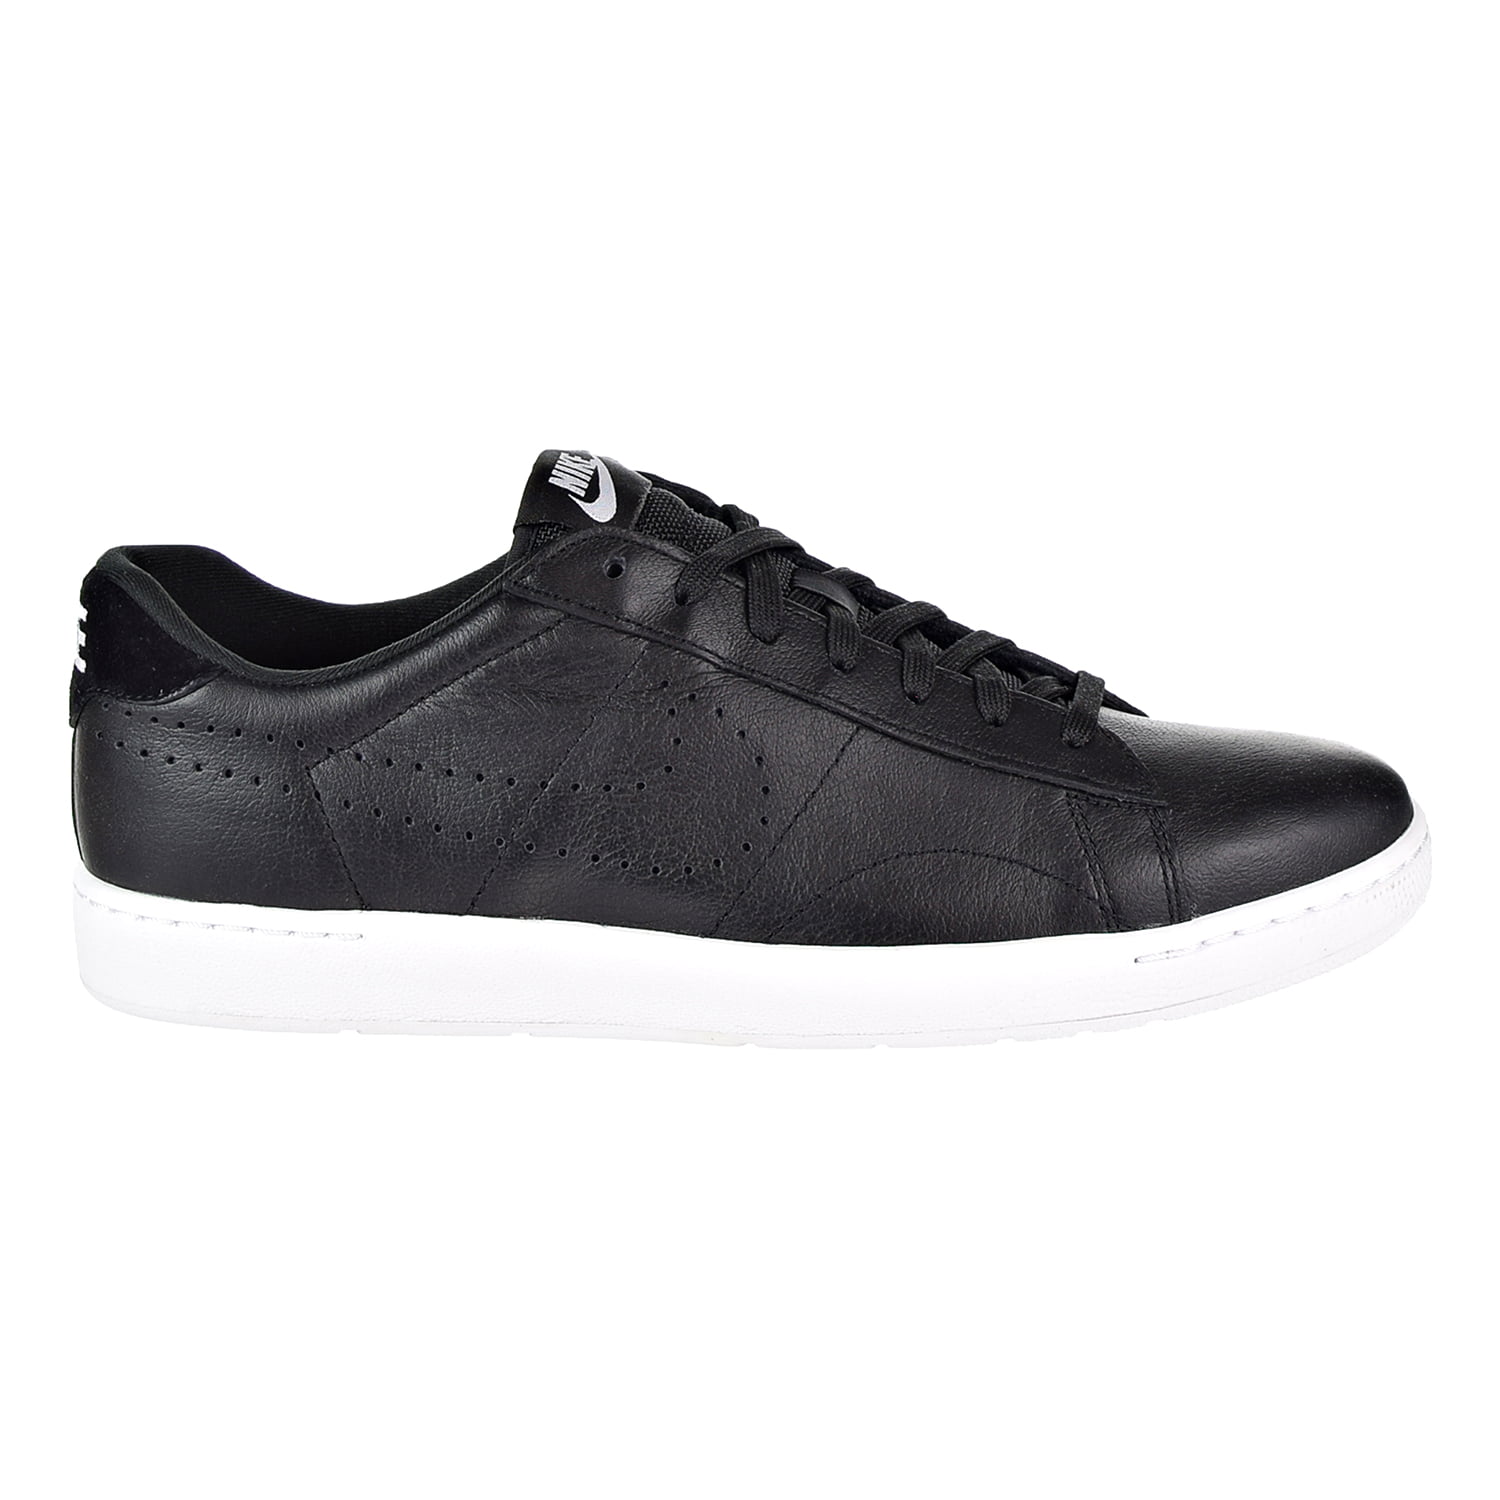 Nike Tennis Classic Ultra Leather Men's Shoes Black/Black 749644-004 ...